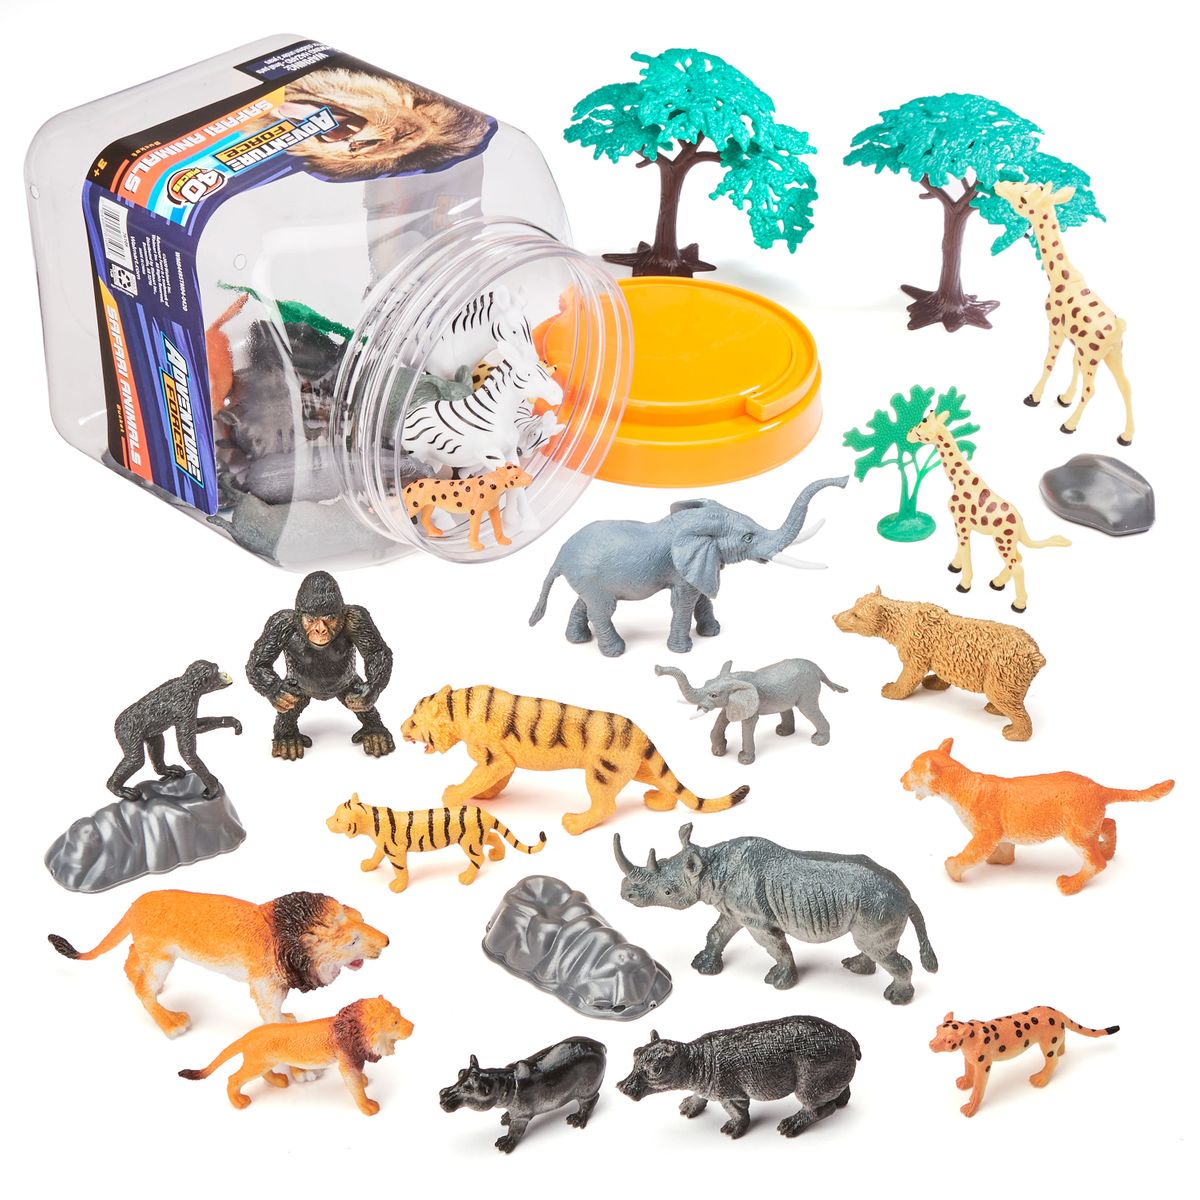 [RDY] [送料無料] Adventure Force Safari Animals Bucket, 40 Pieces [楽天海外通販] | Adventure Force Safari Animals Bucket, 40 Pieces